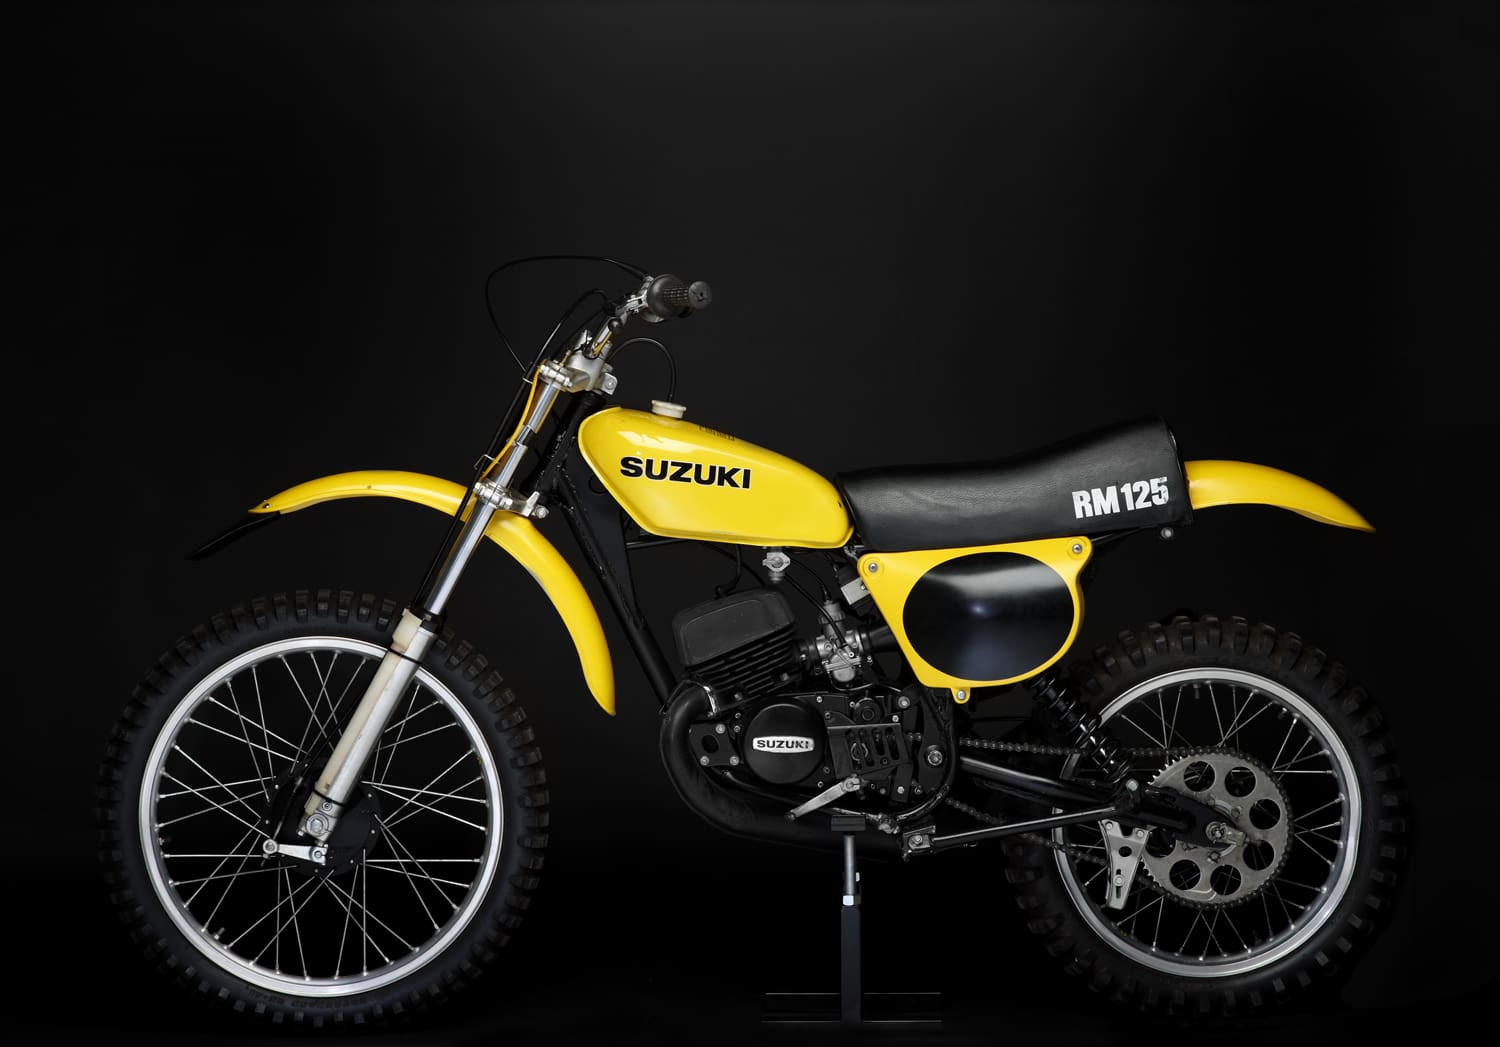 A yellow dirt bike sitting on a black background.